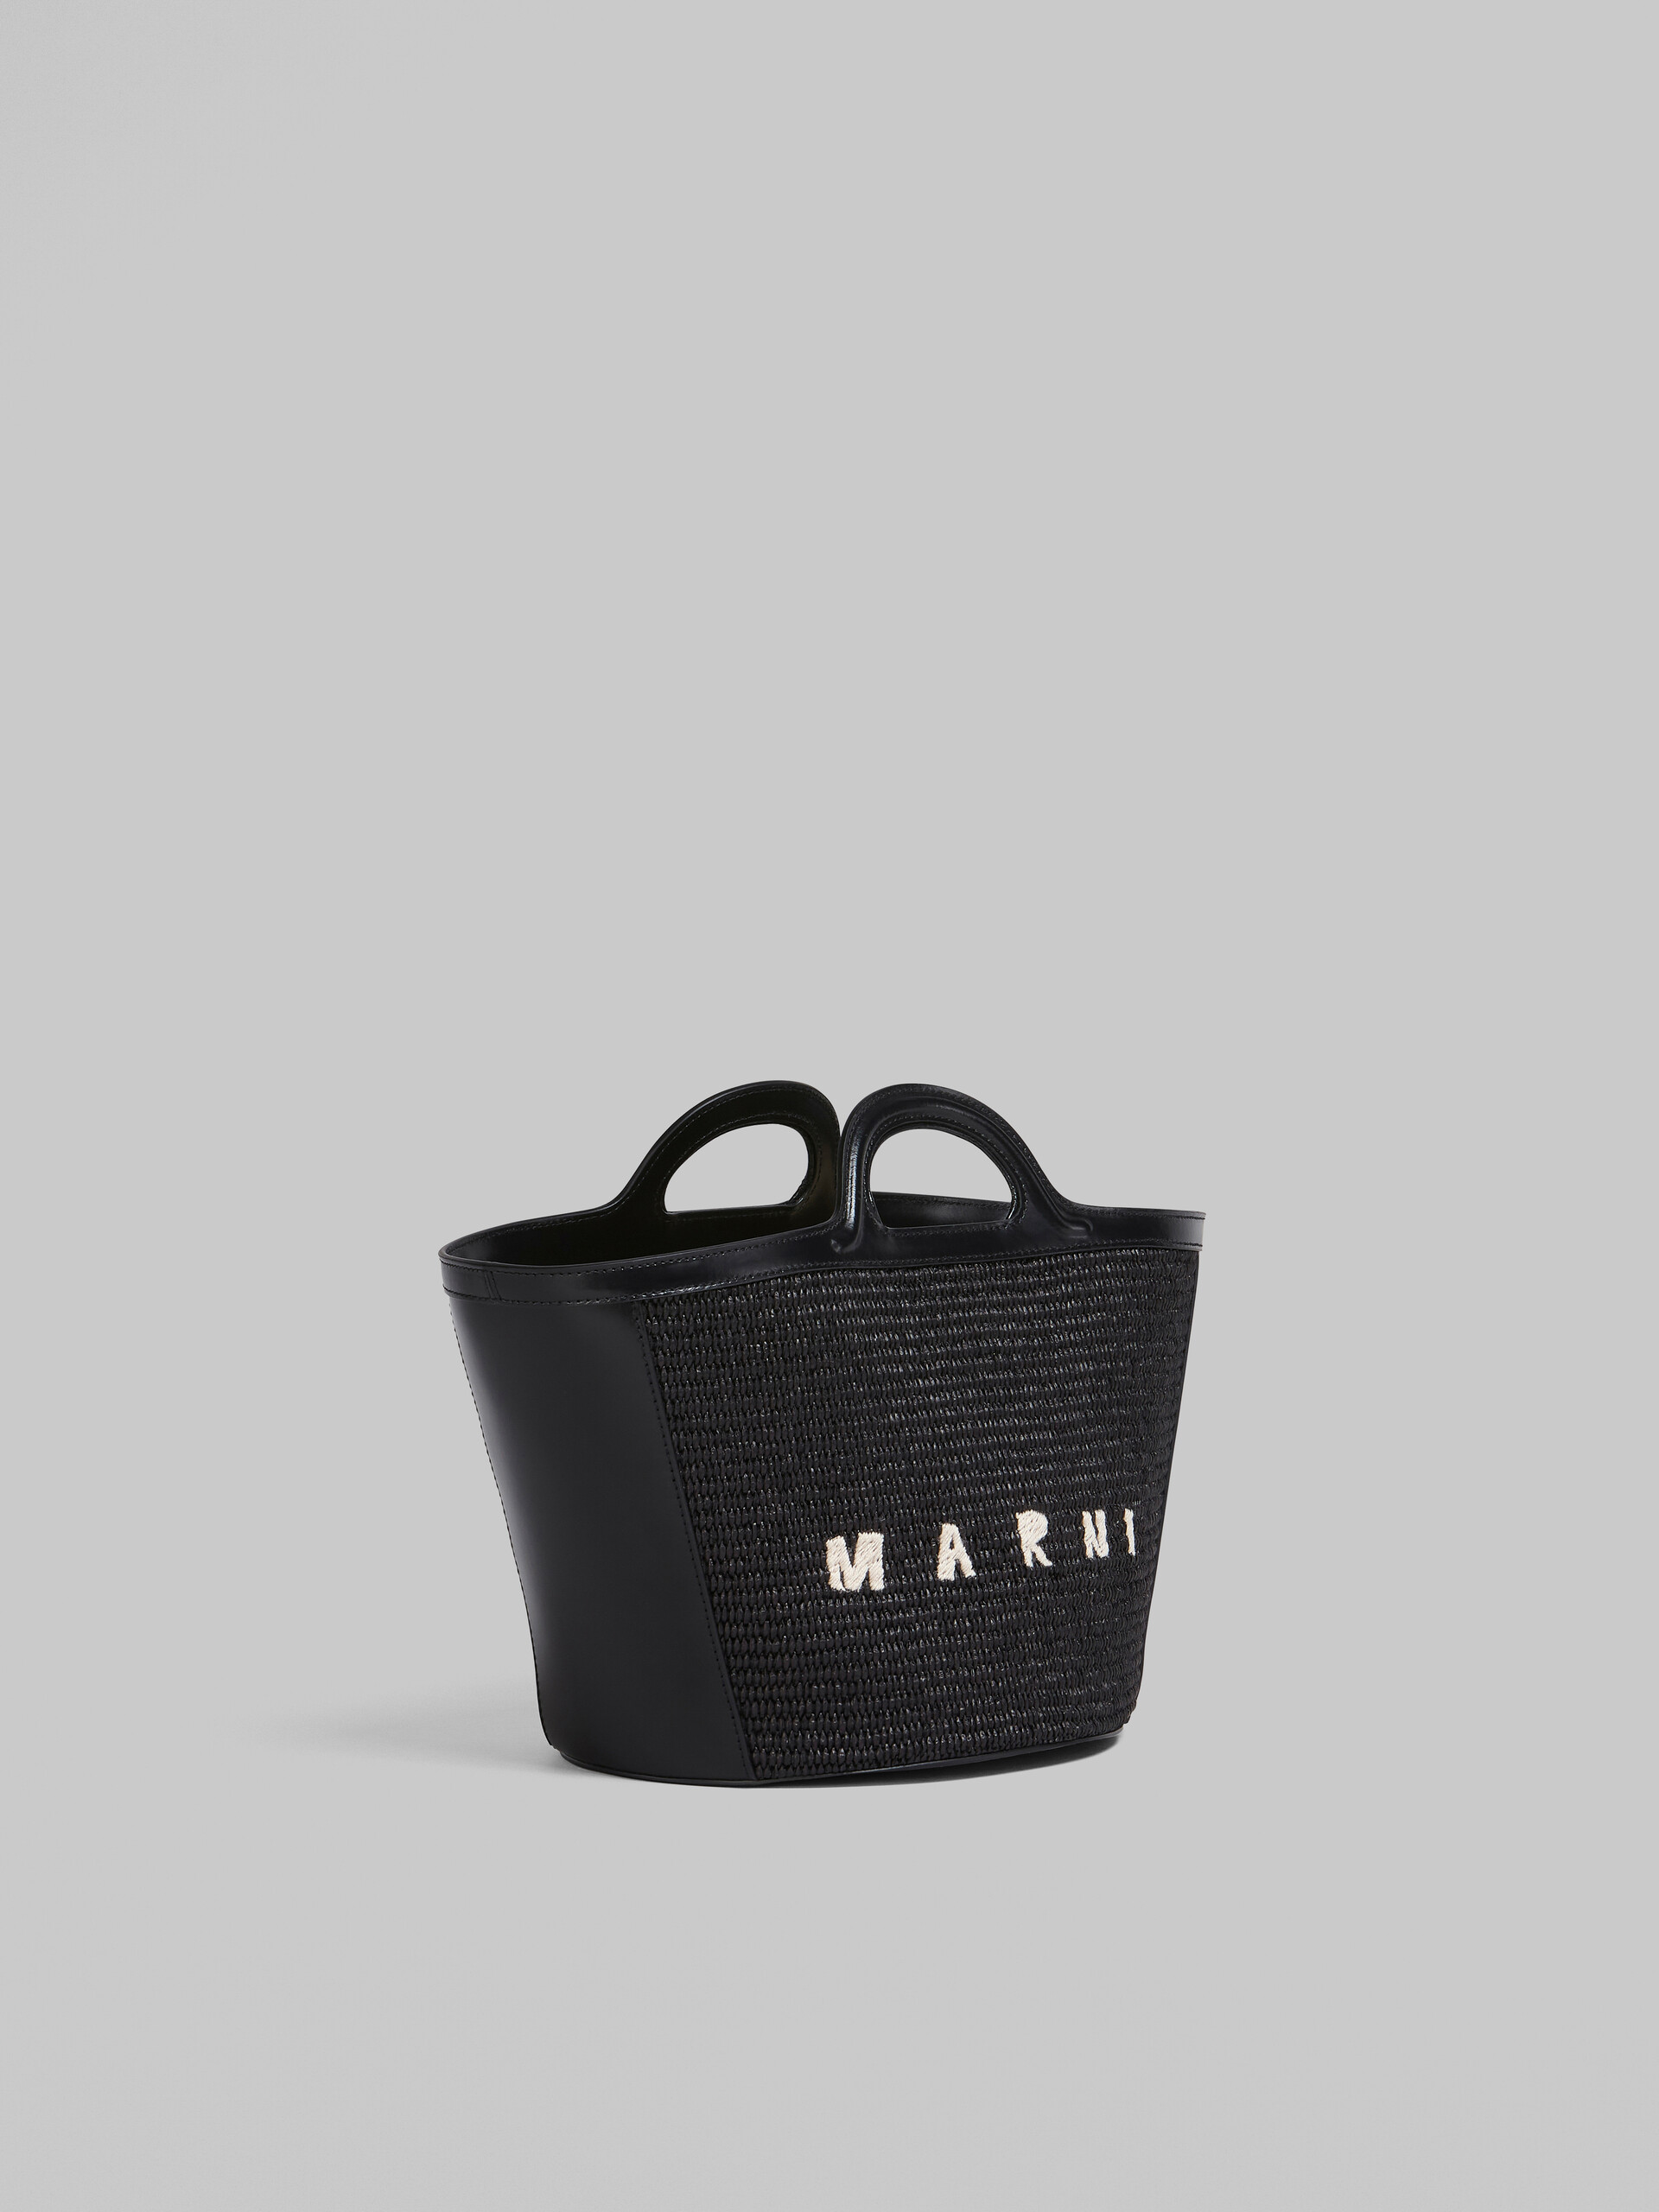 Tropicalia Small Bag in black leather and raffia - Handbags - Image 6